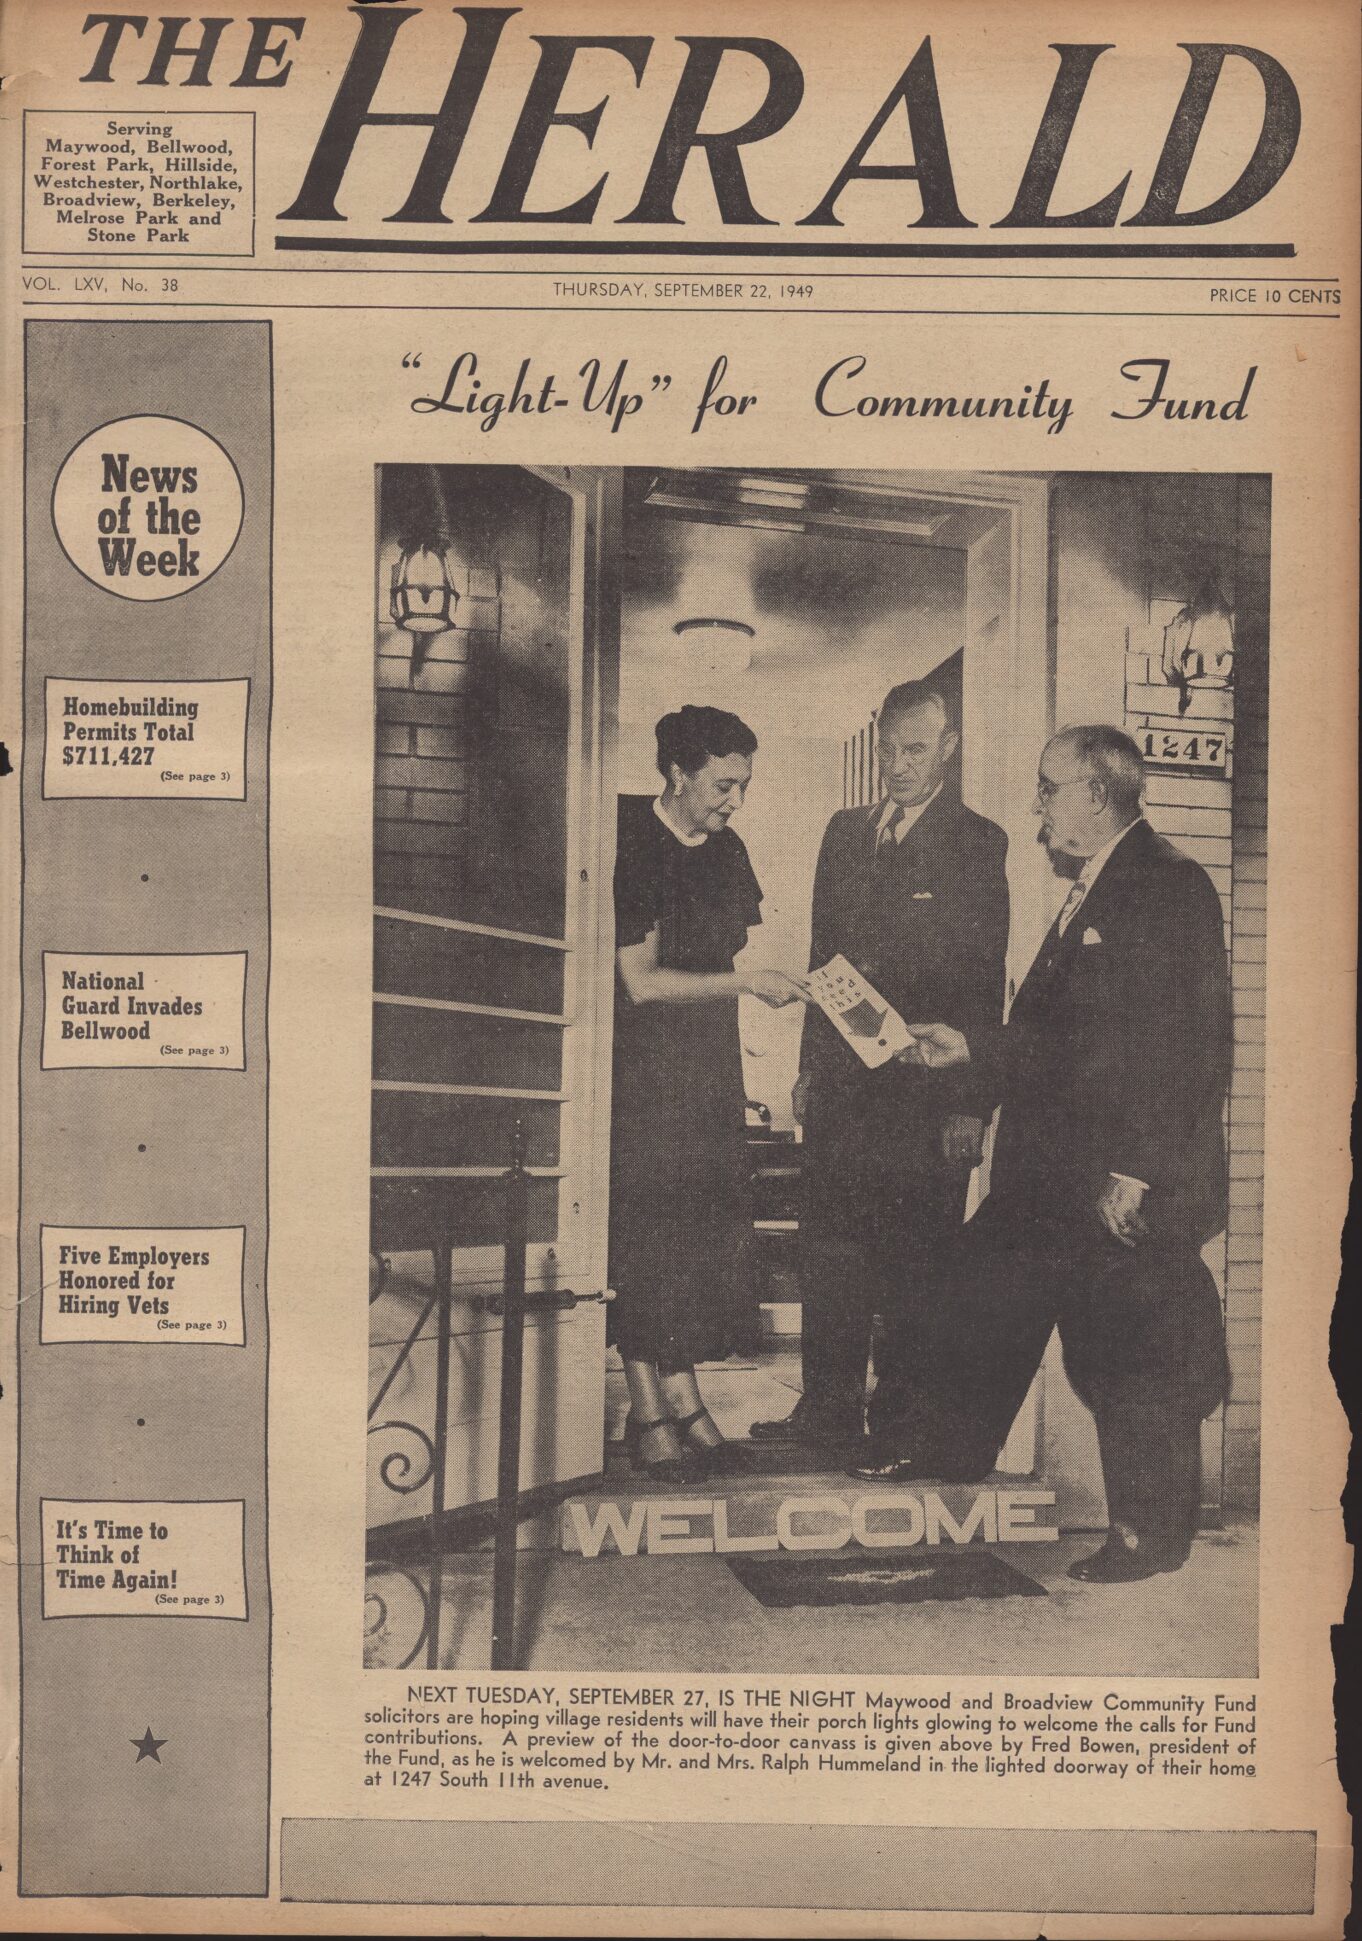 The Herald – 19490922